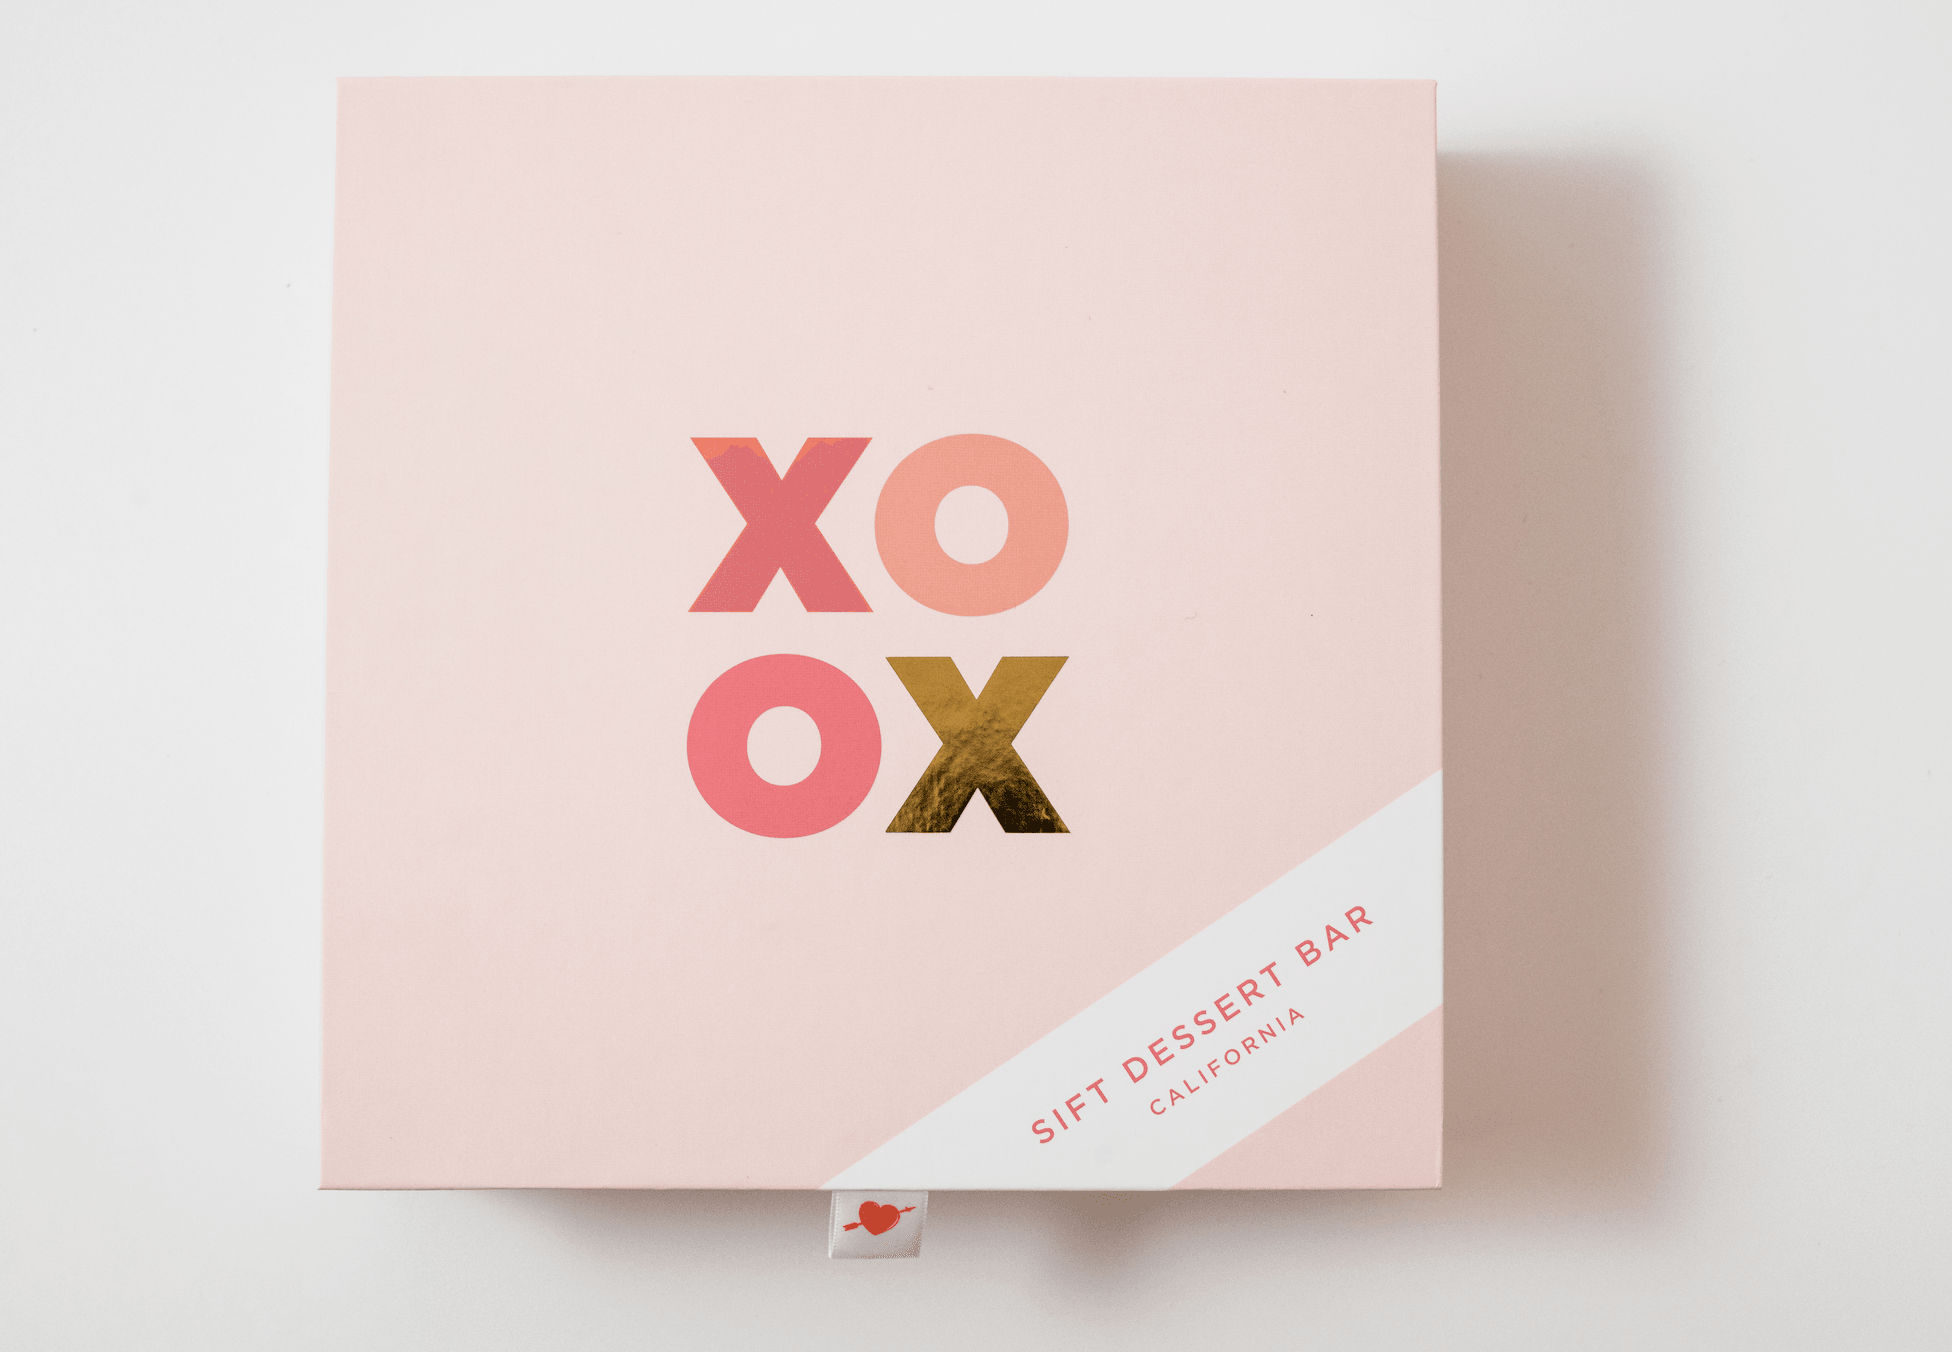 XOXO Large French Macaron Gift Box - Sift Dessert Bar